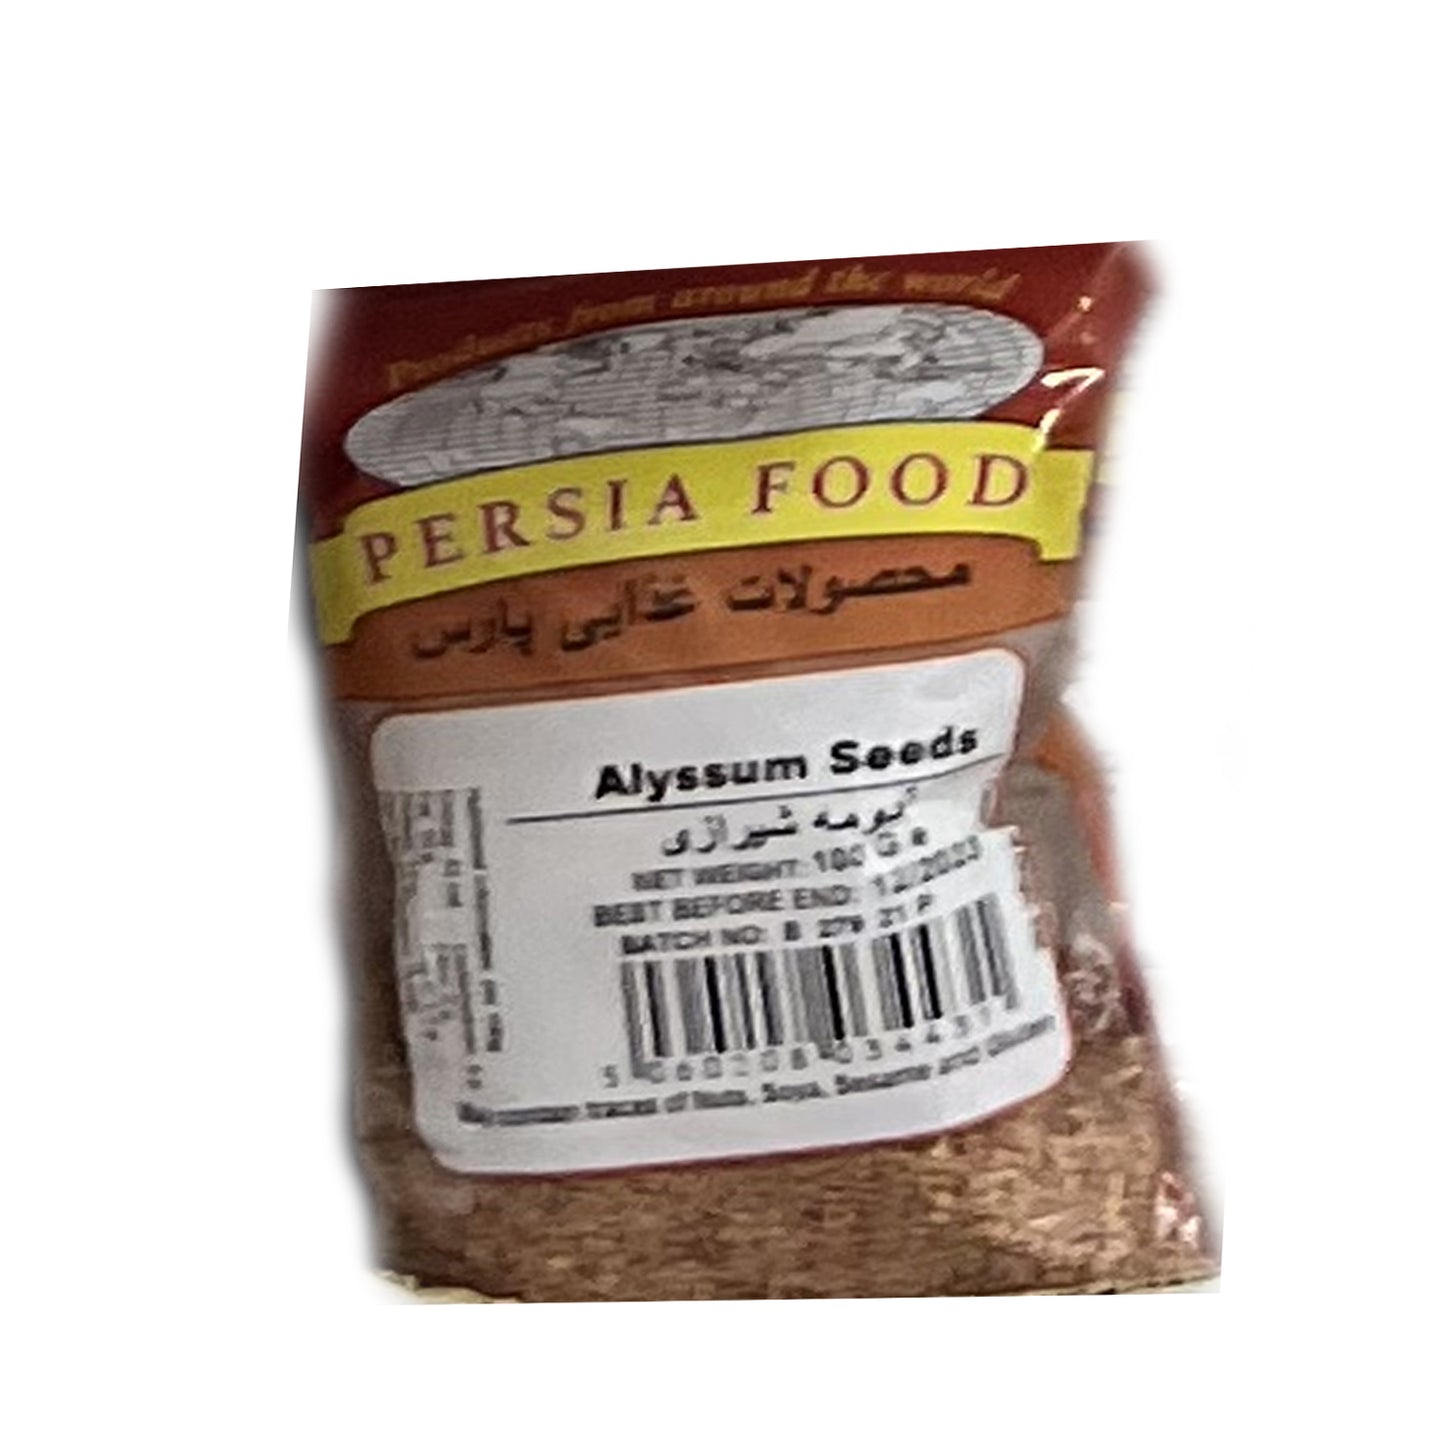 Persia Food Alyssum Seeds 100gr